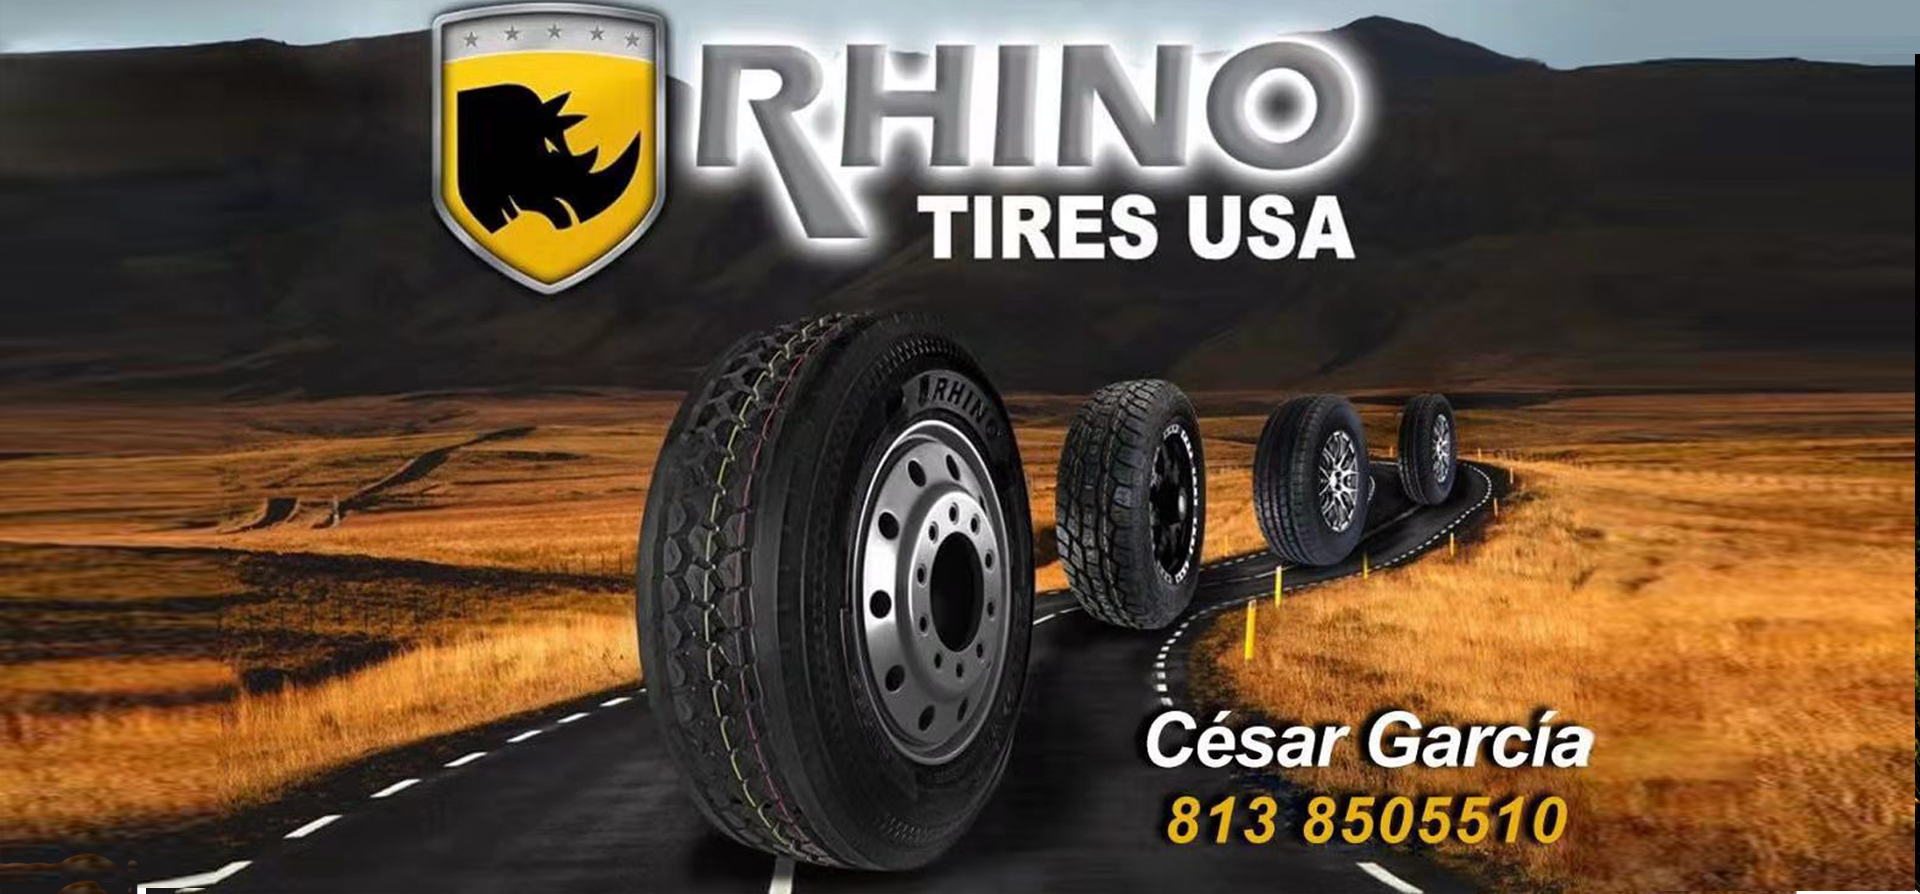 Rhino tire Florida 